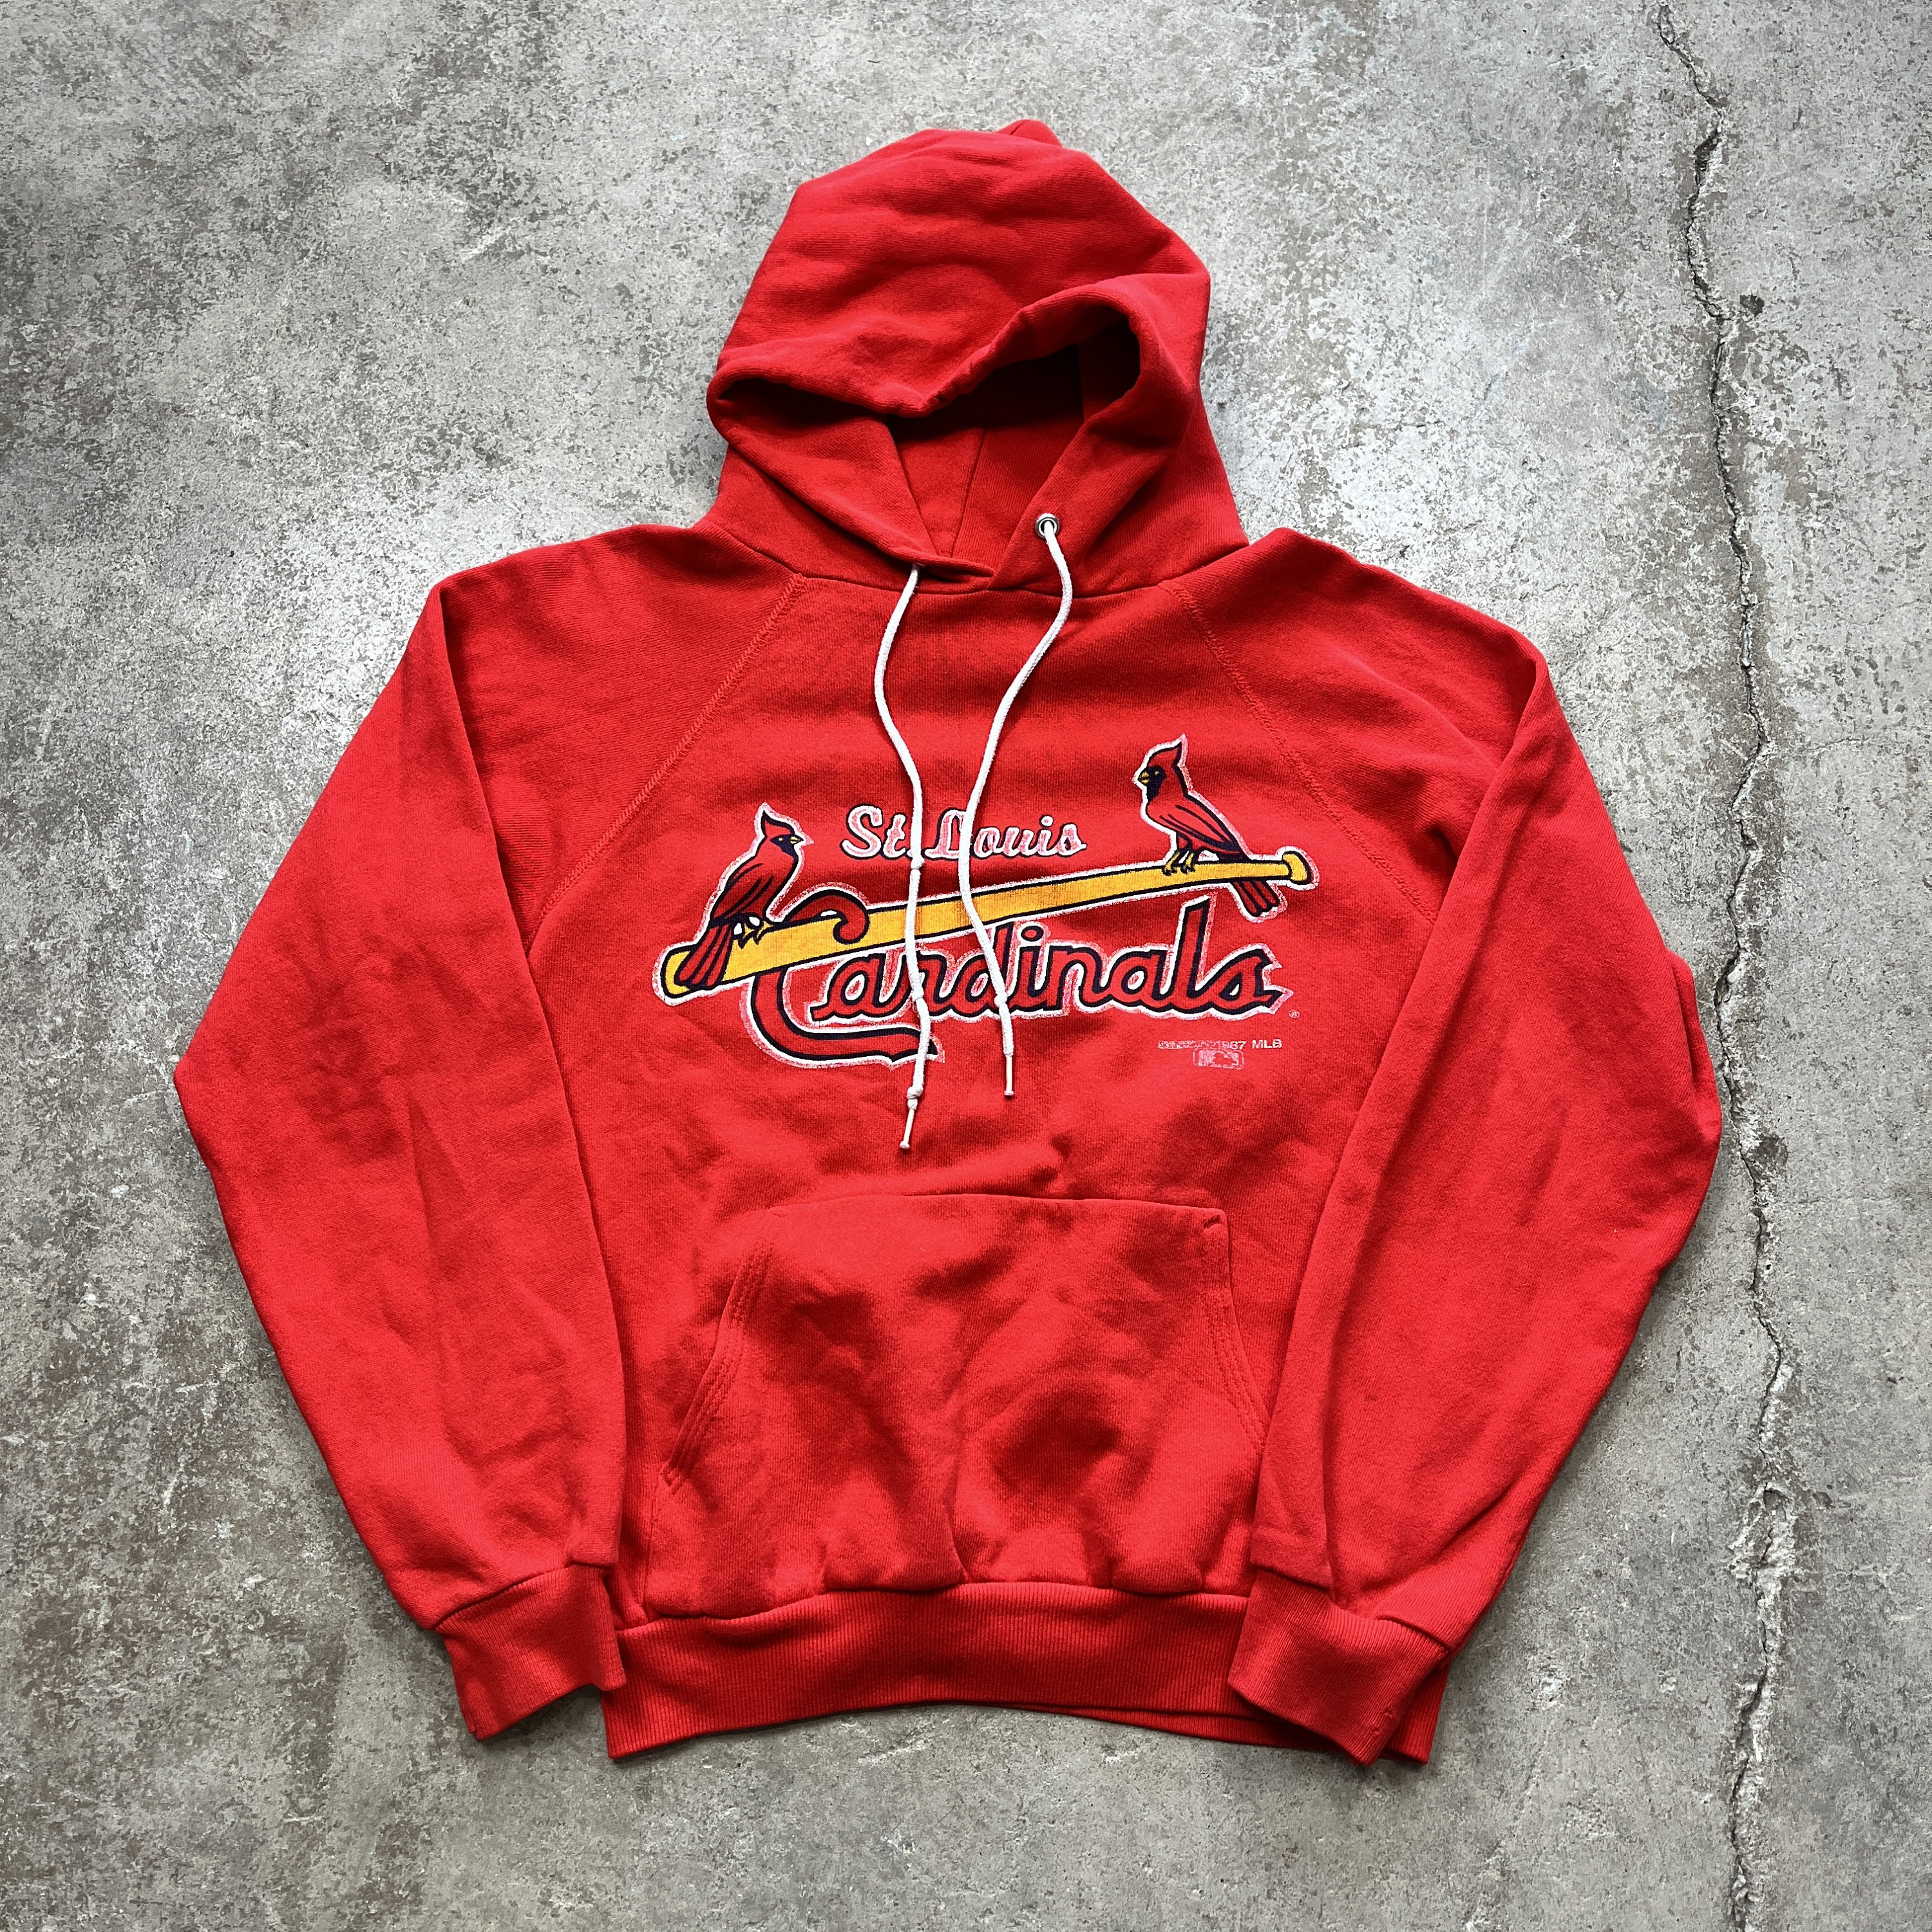 St Louis Cardinals Sweatshirt -  Denmark